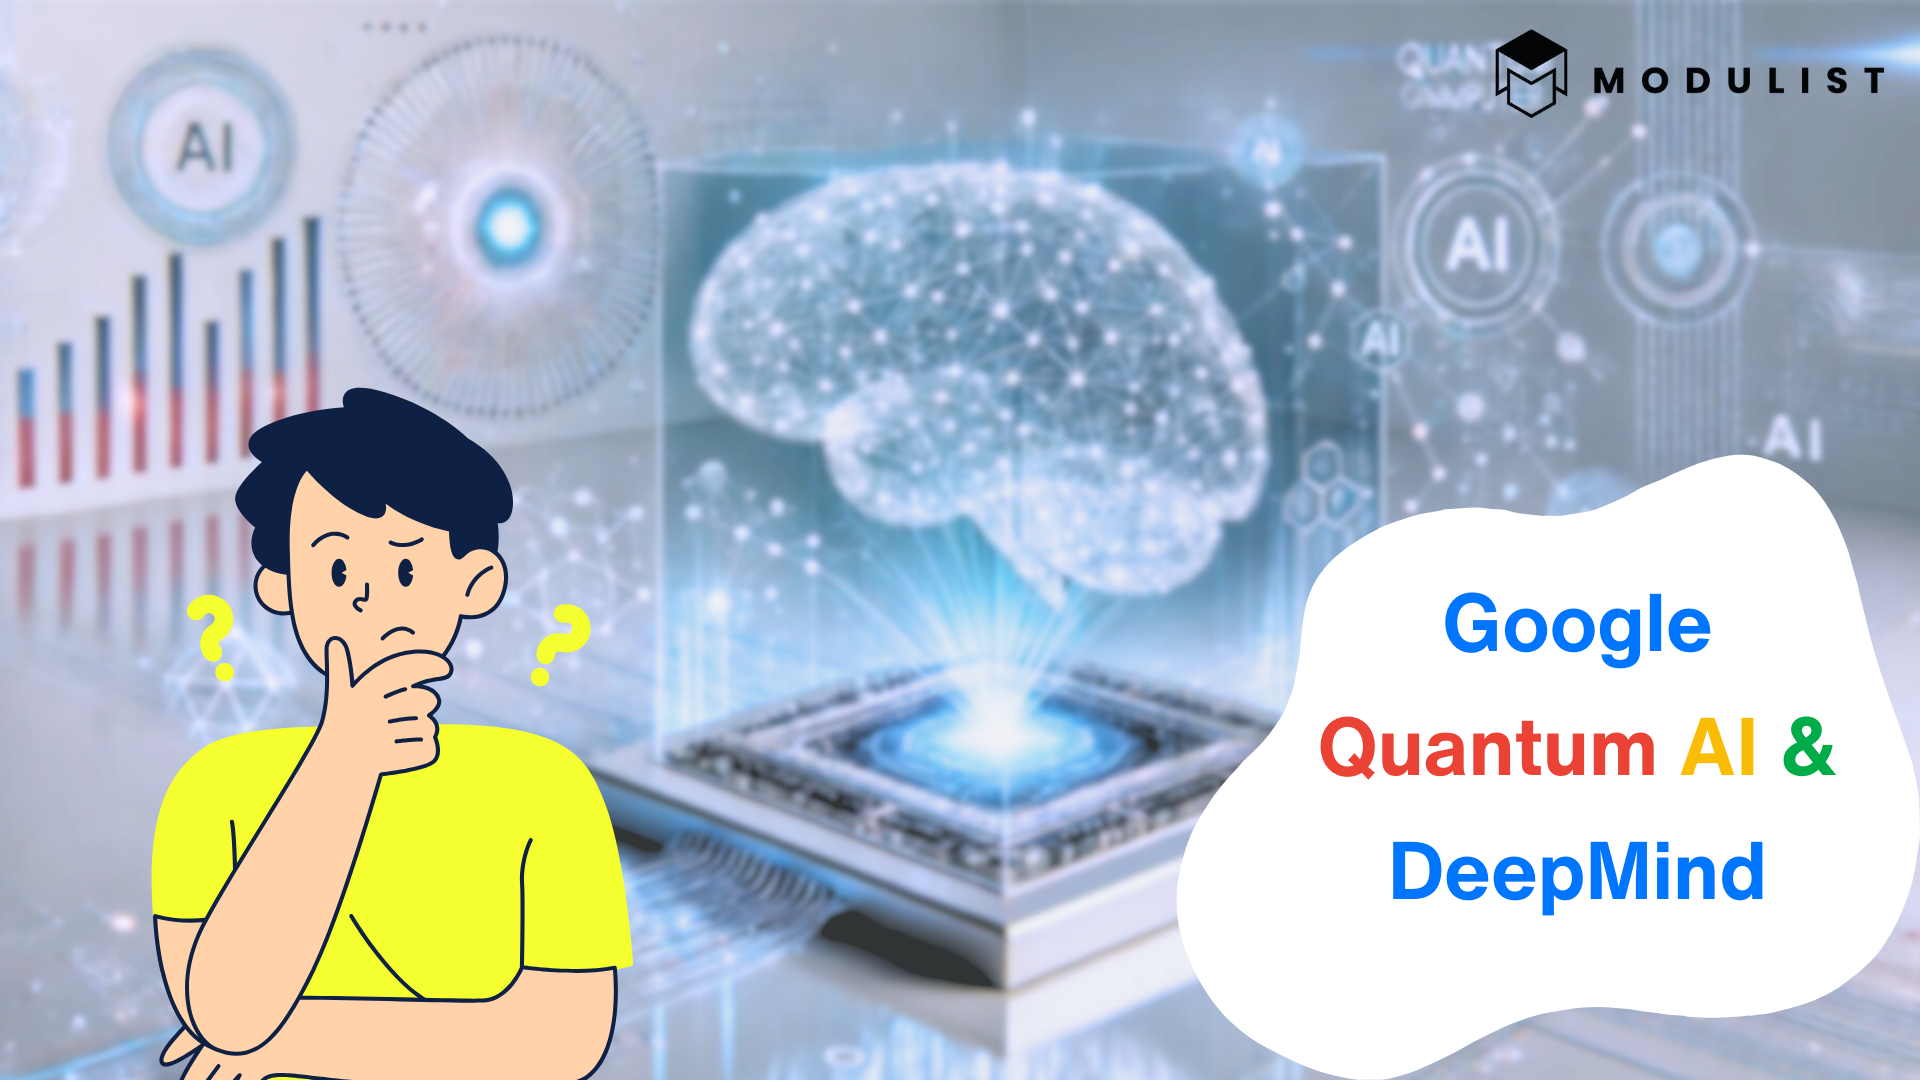 Google Quantum AI & DeepMind